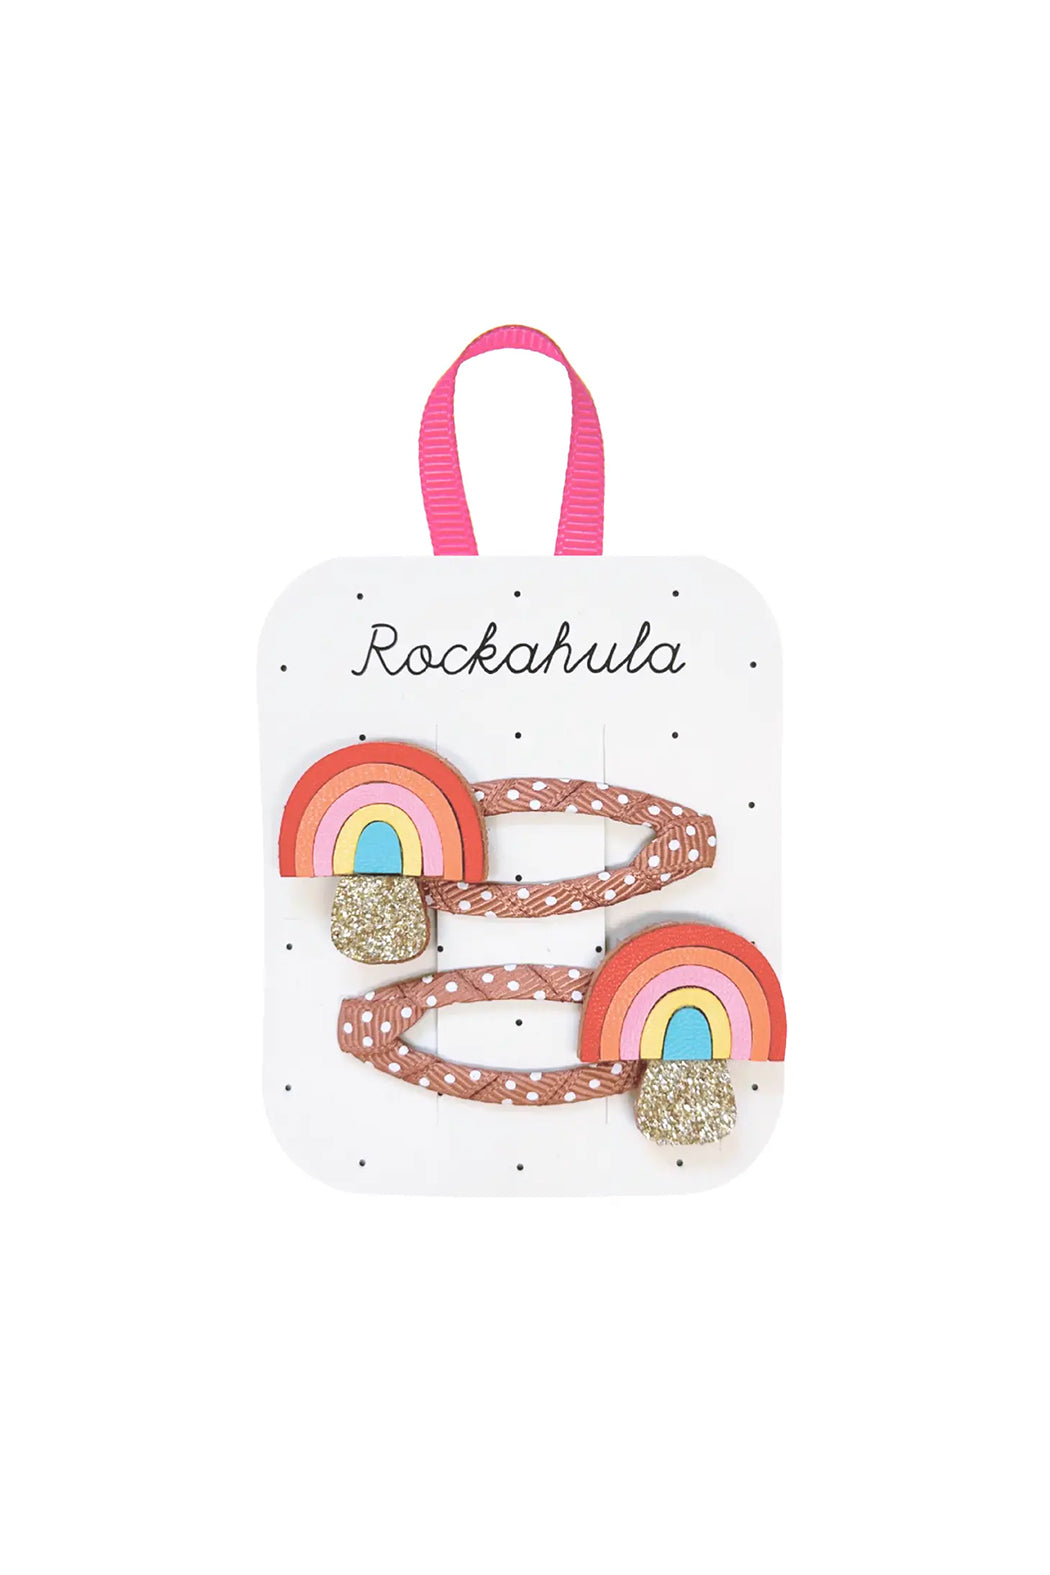 Rockahula Rainbow Toadstool Clips